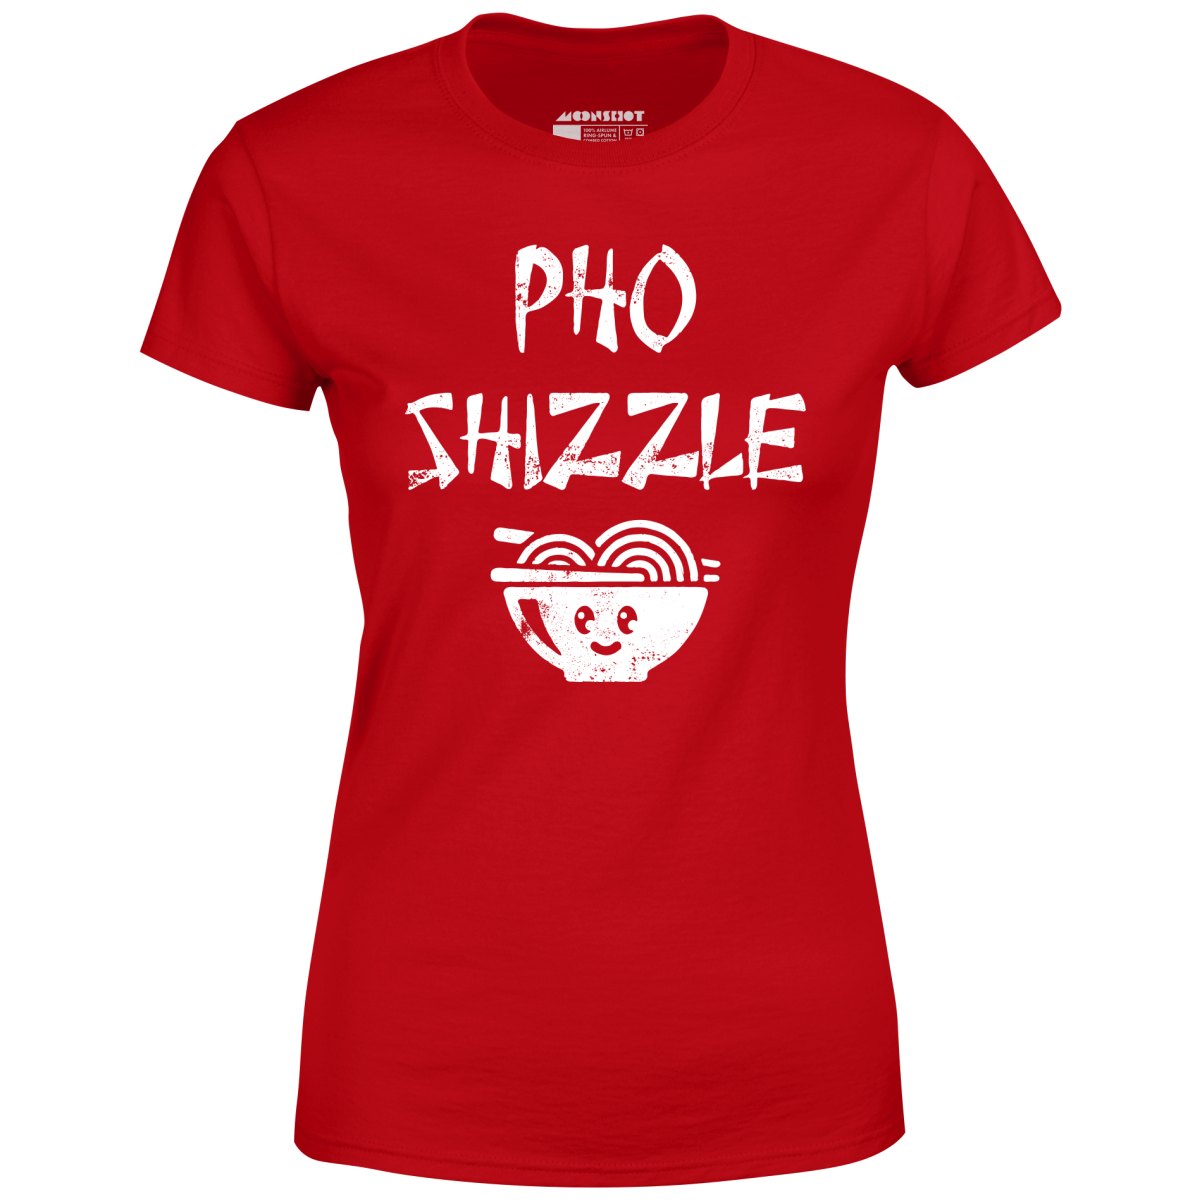 Pho Shizzle - Women's T-Shirt